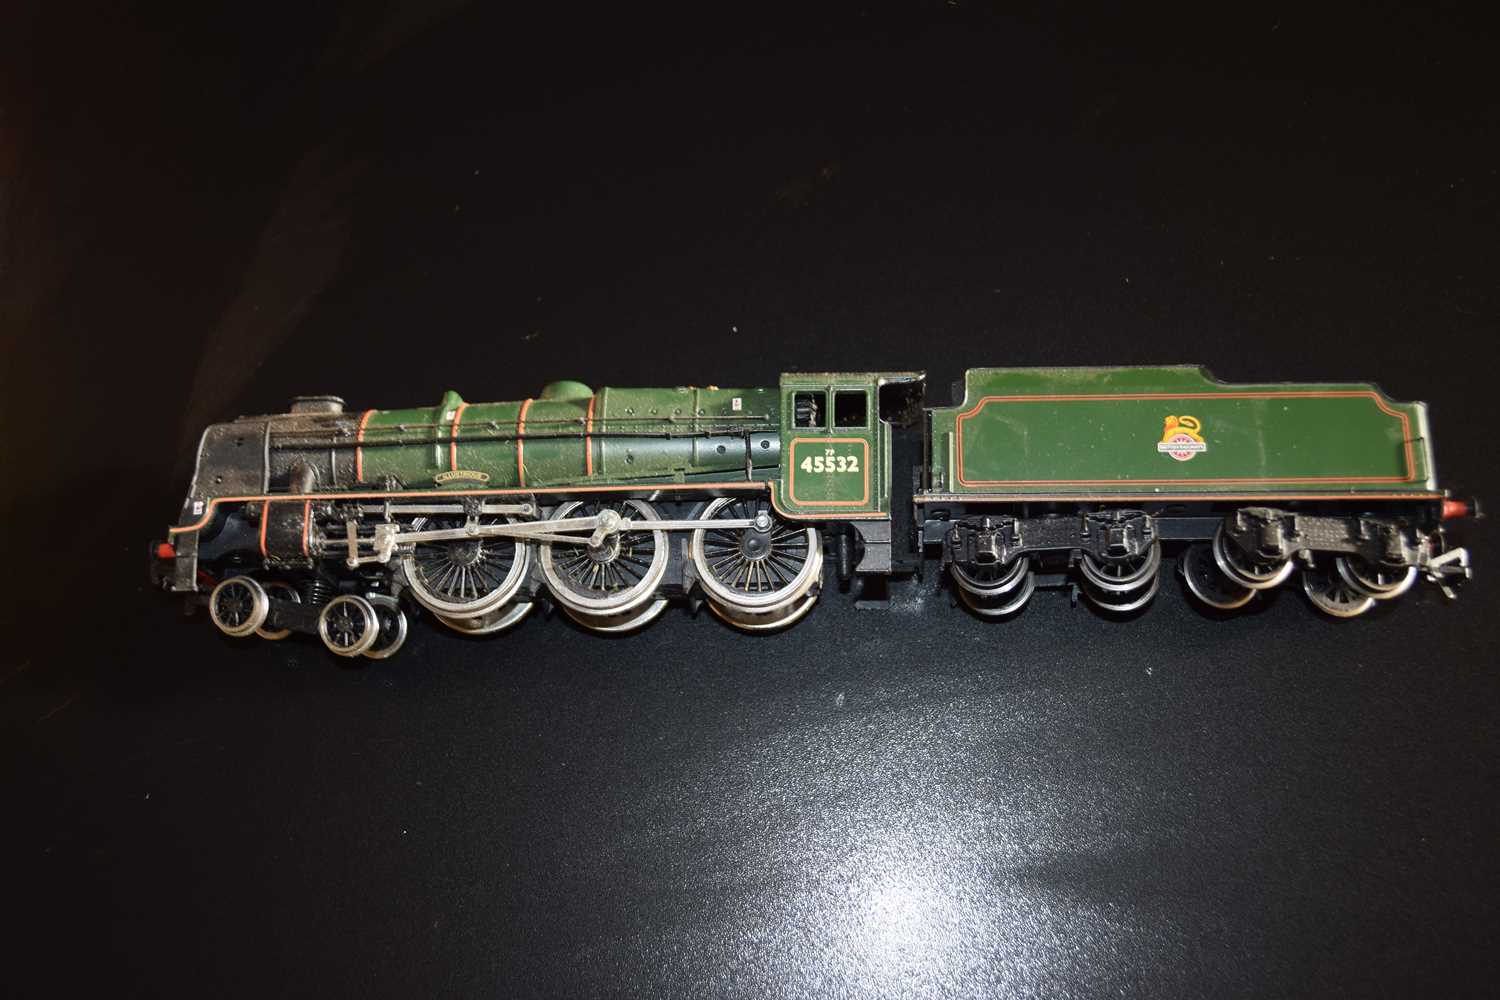 Mainline 00 gauge locomotive, 'Illustrious' with tender